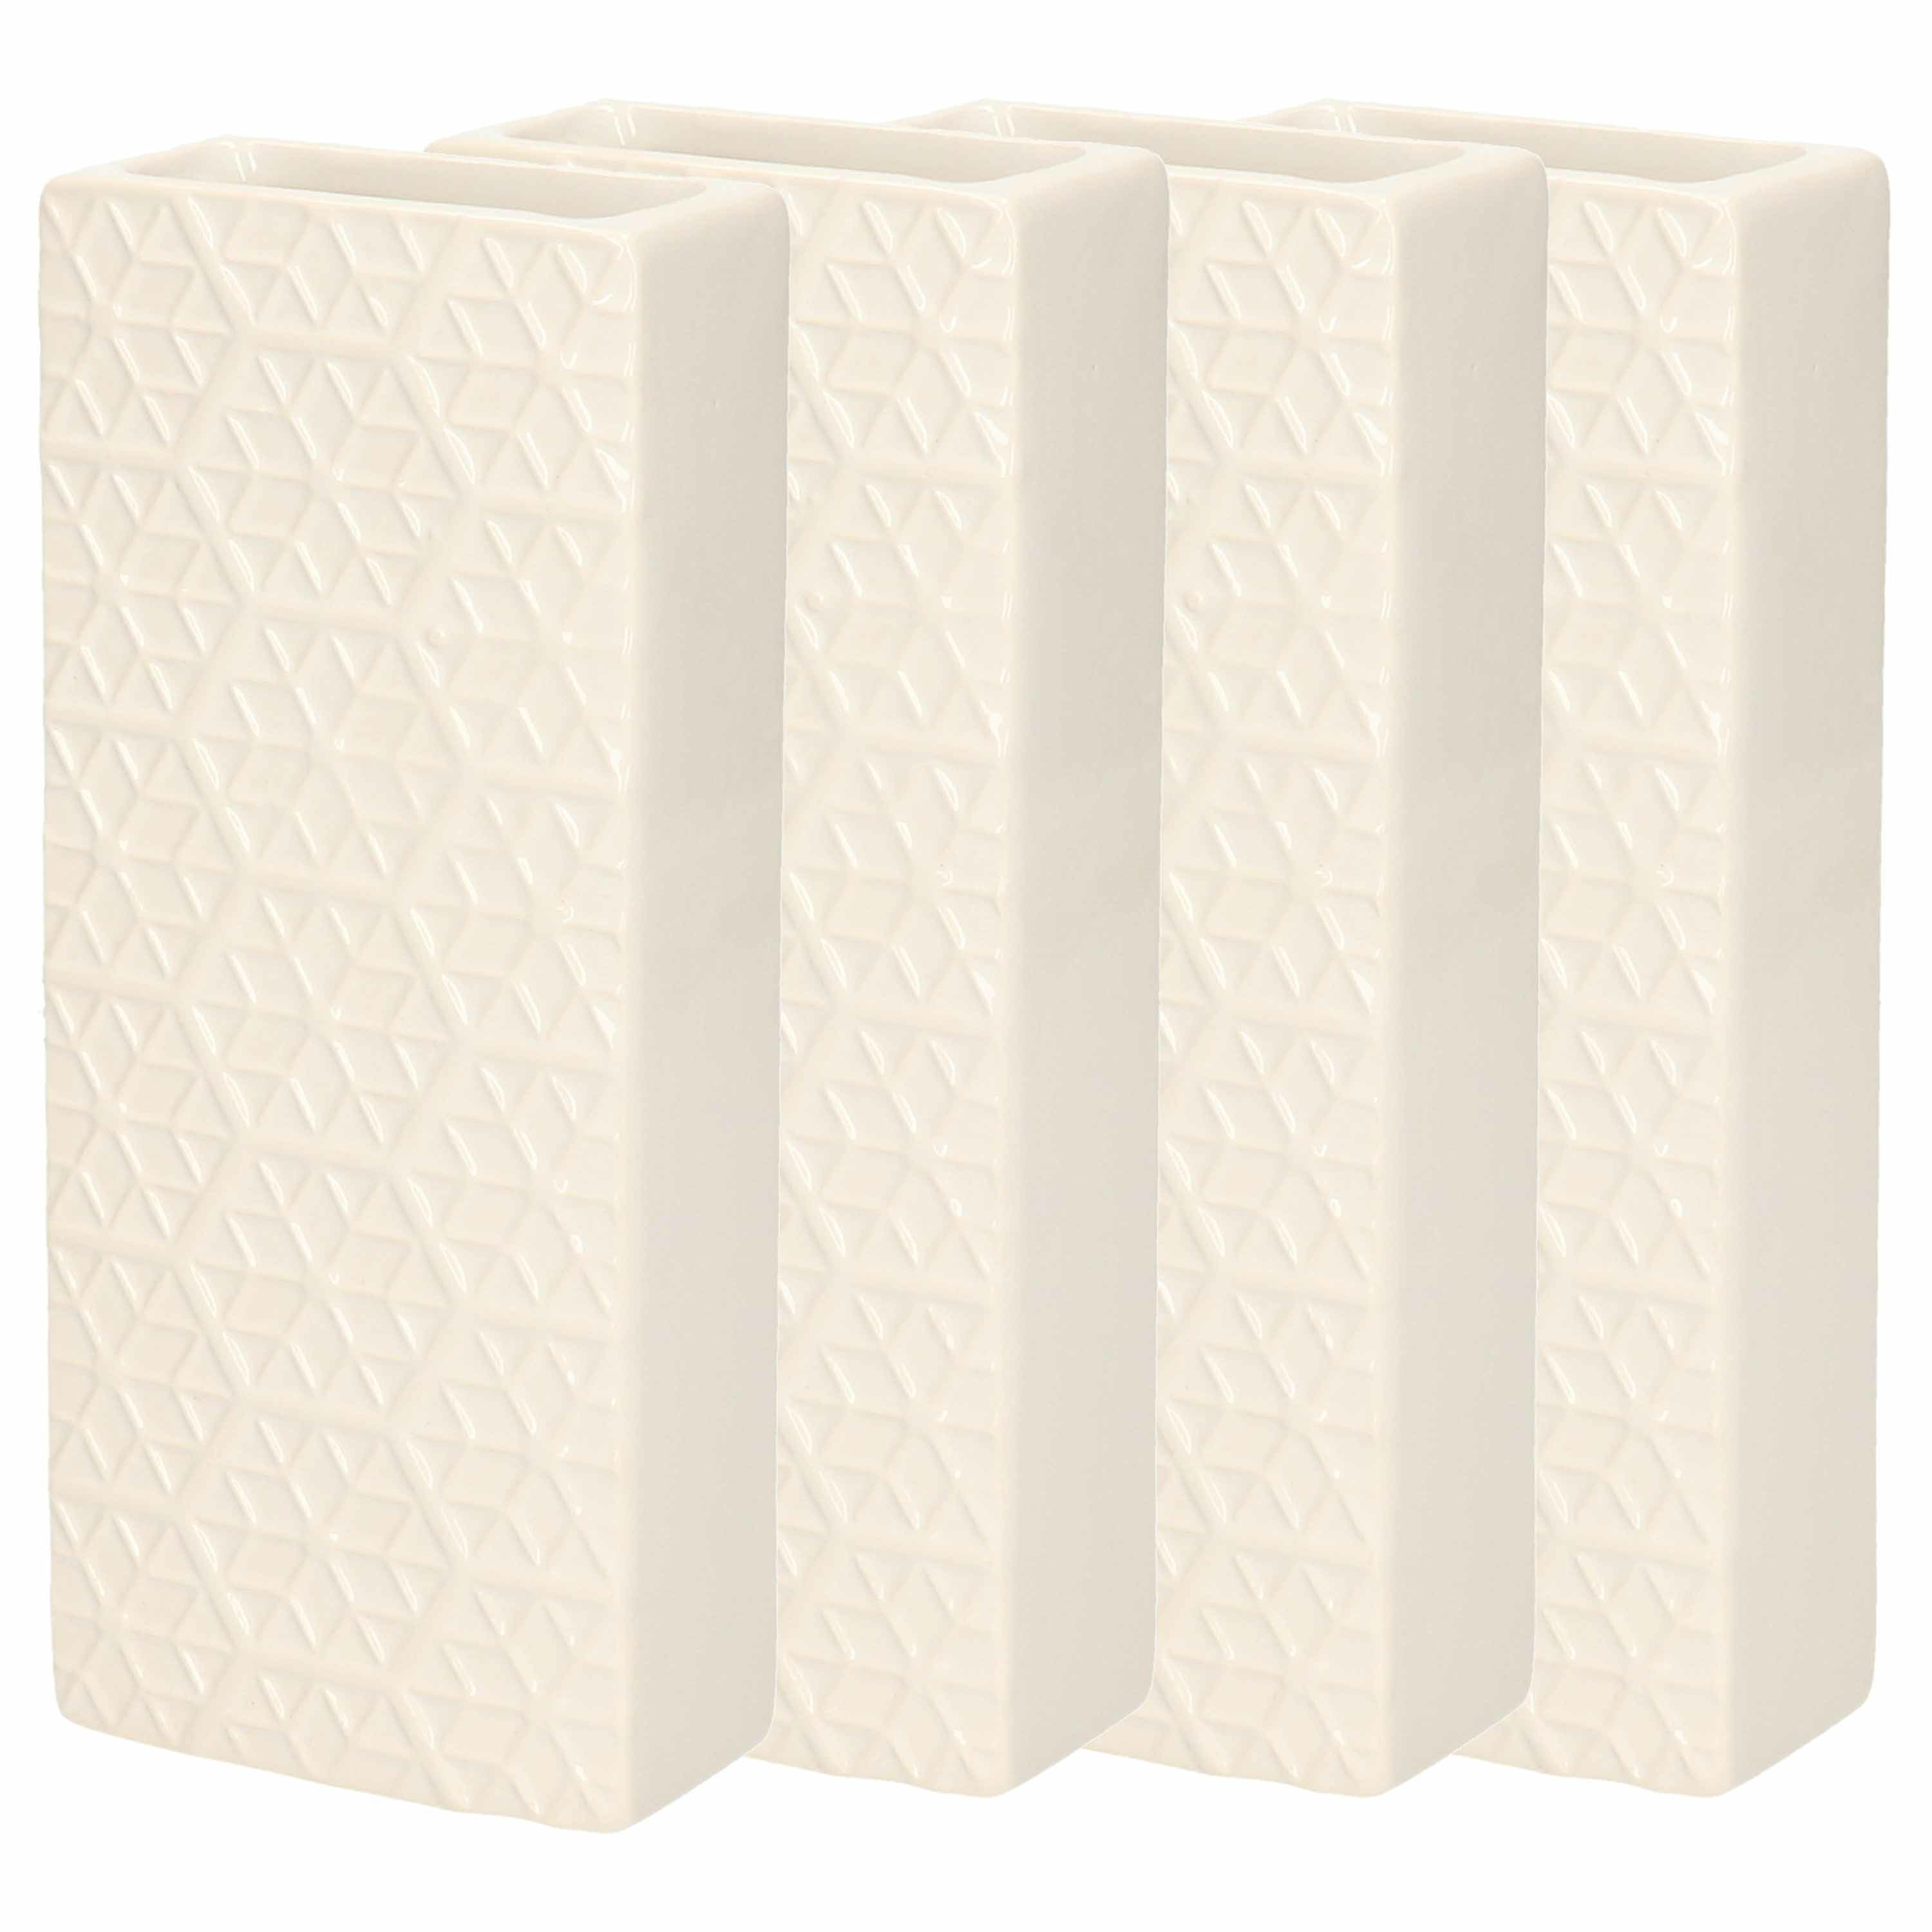 Waterverdamper 4x ivoor wit keramiek 400 ml radiatorbak luchtbevochtiger 7,4 x 17,7 cm